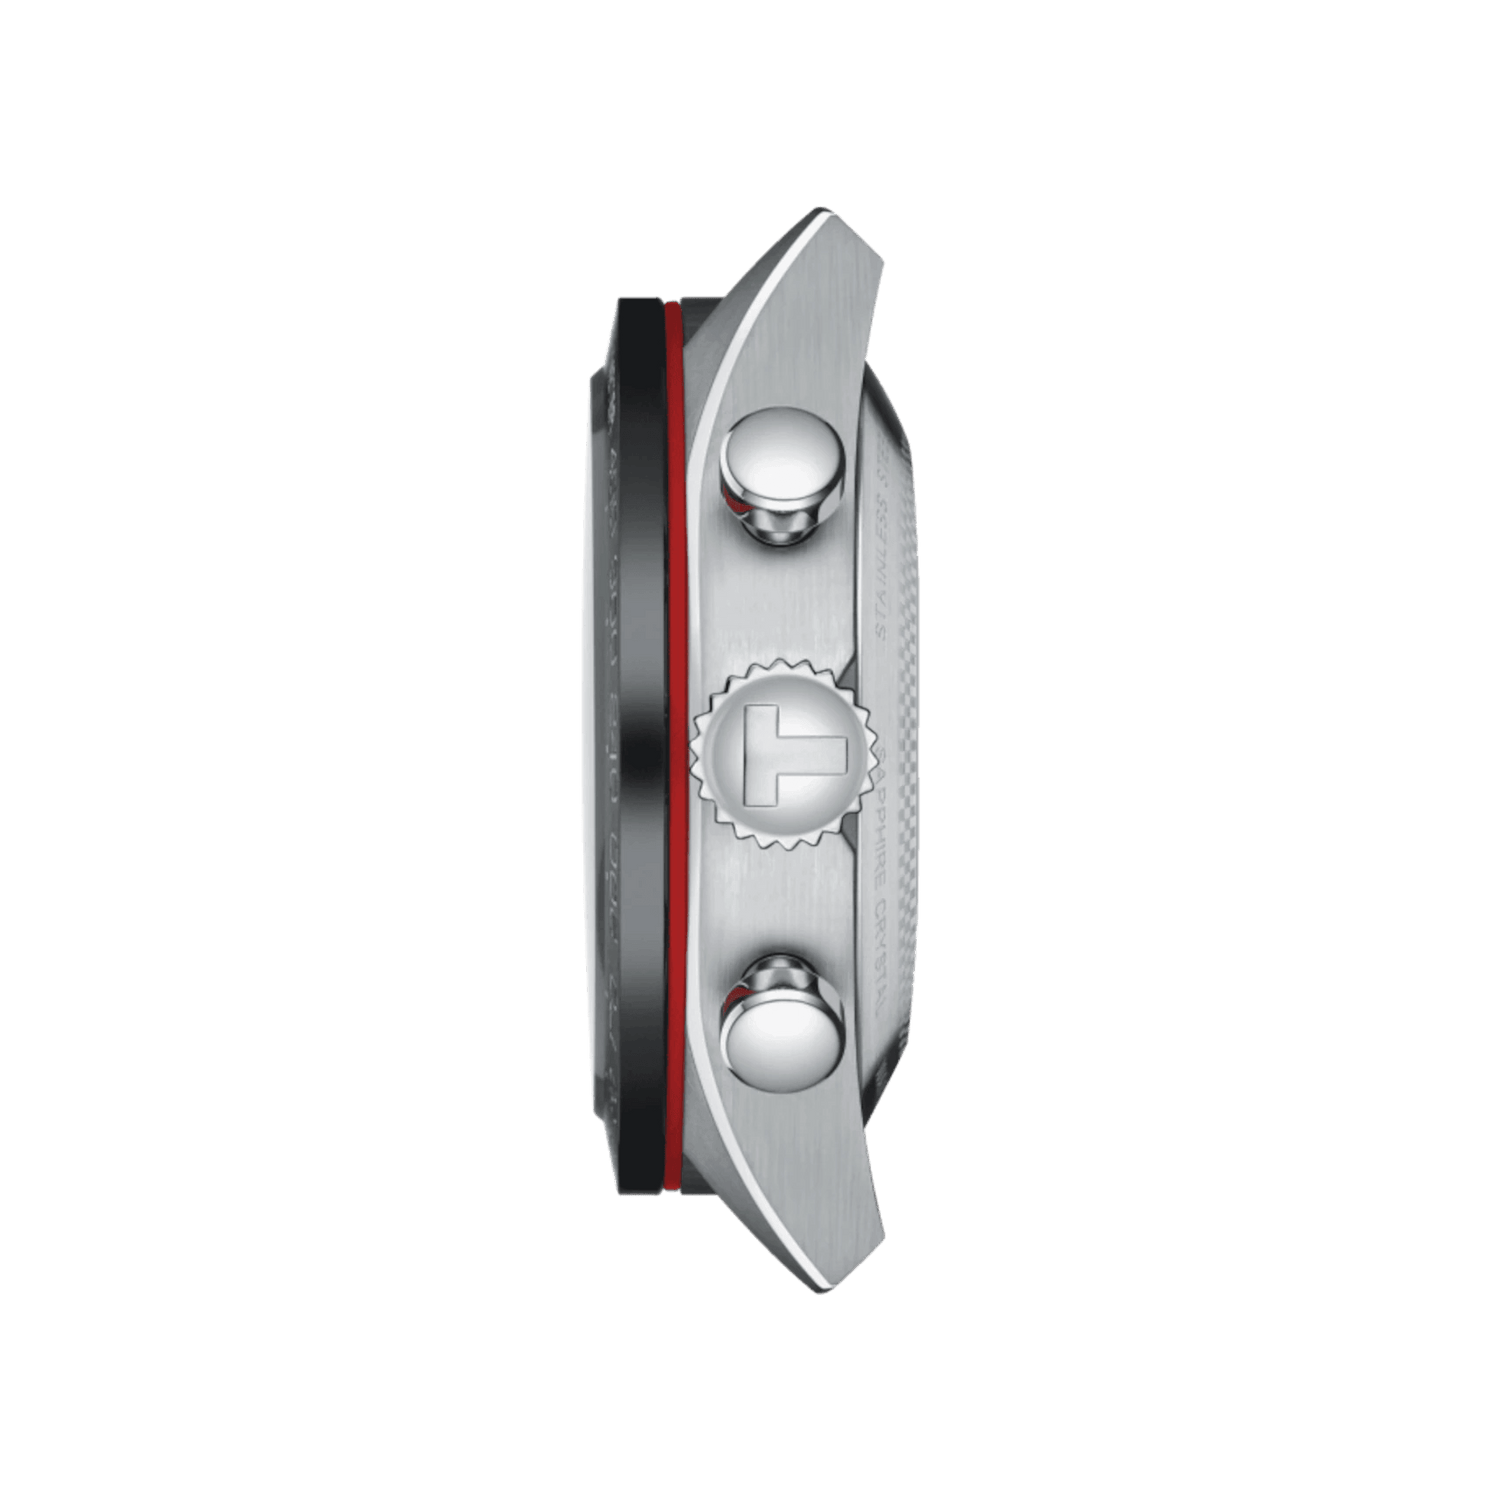 Tissot PRS 516 Automatic Chronograph - Brunott Juwelier